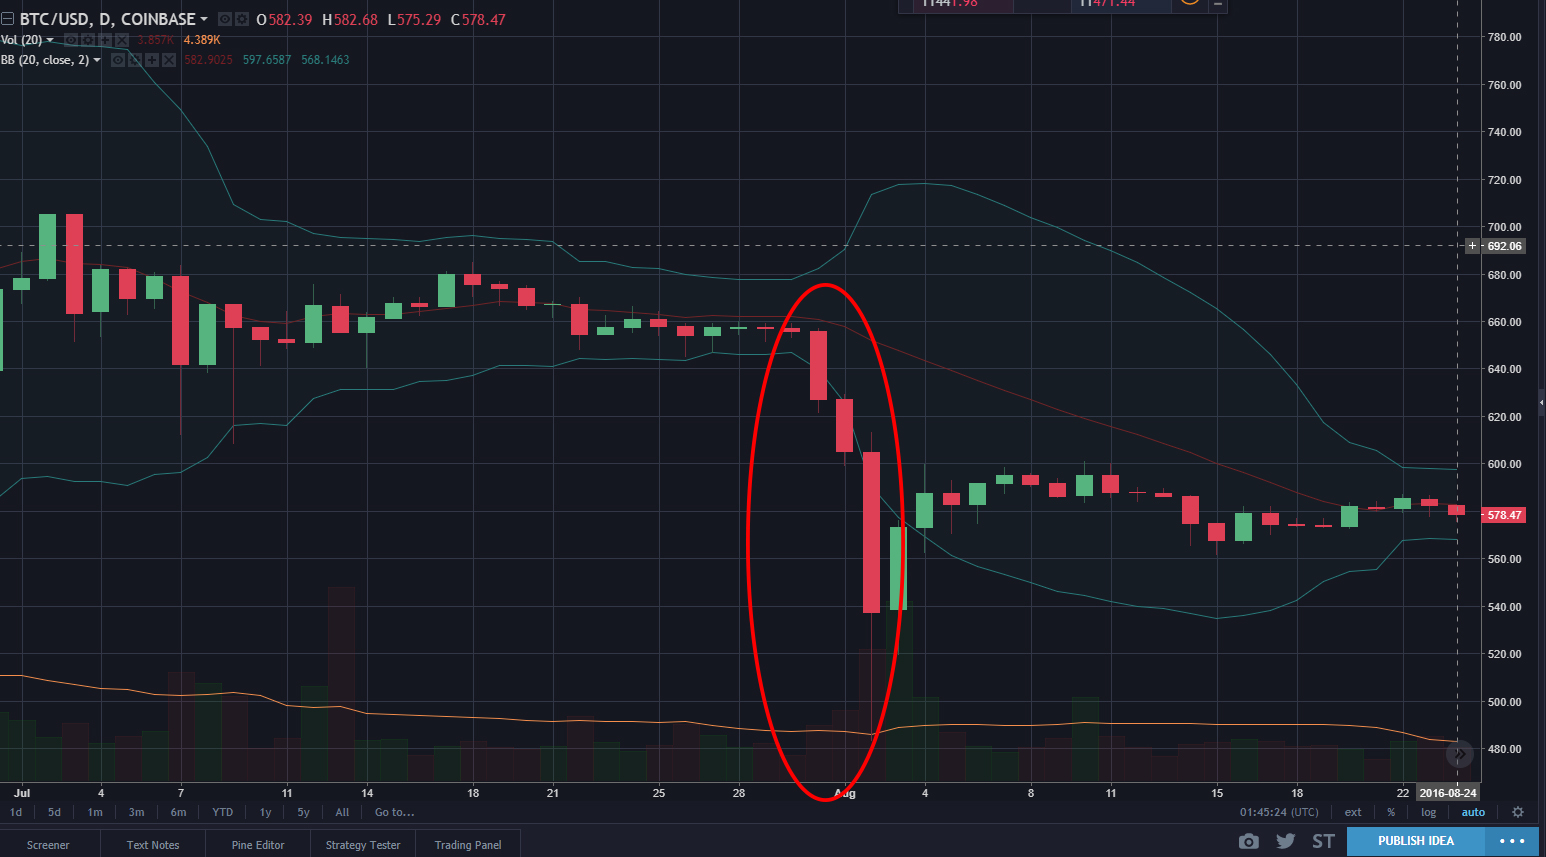 bitcoin experiencing bearish market